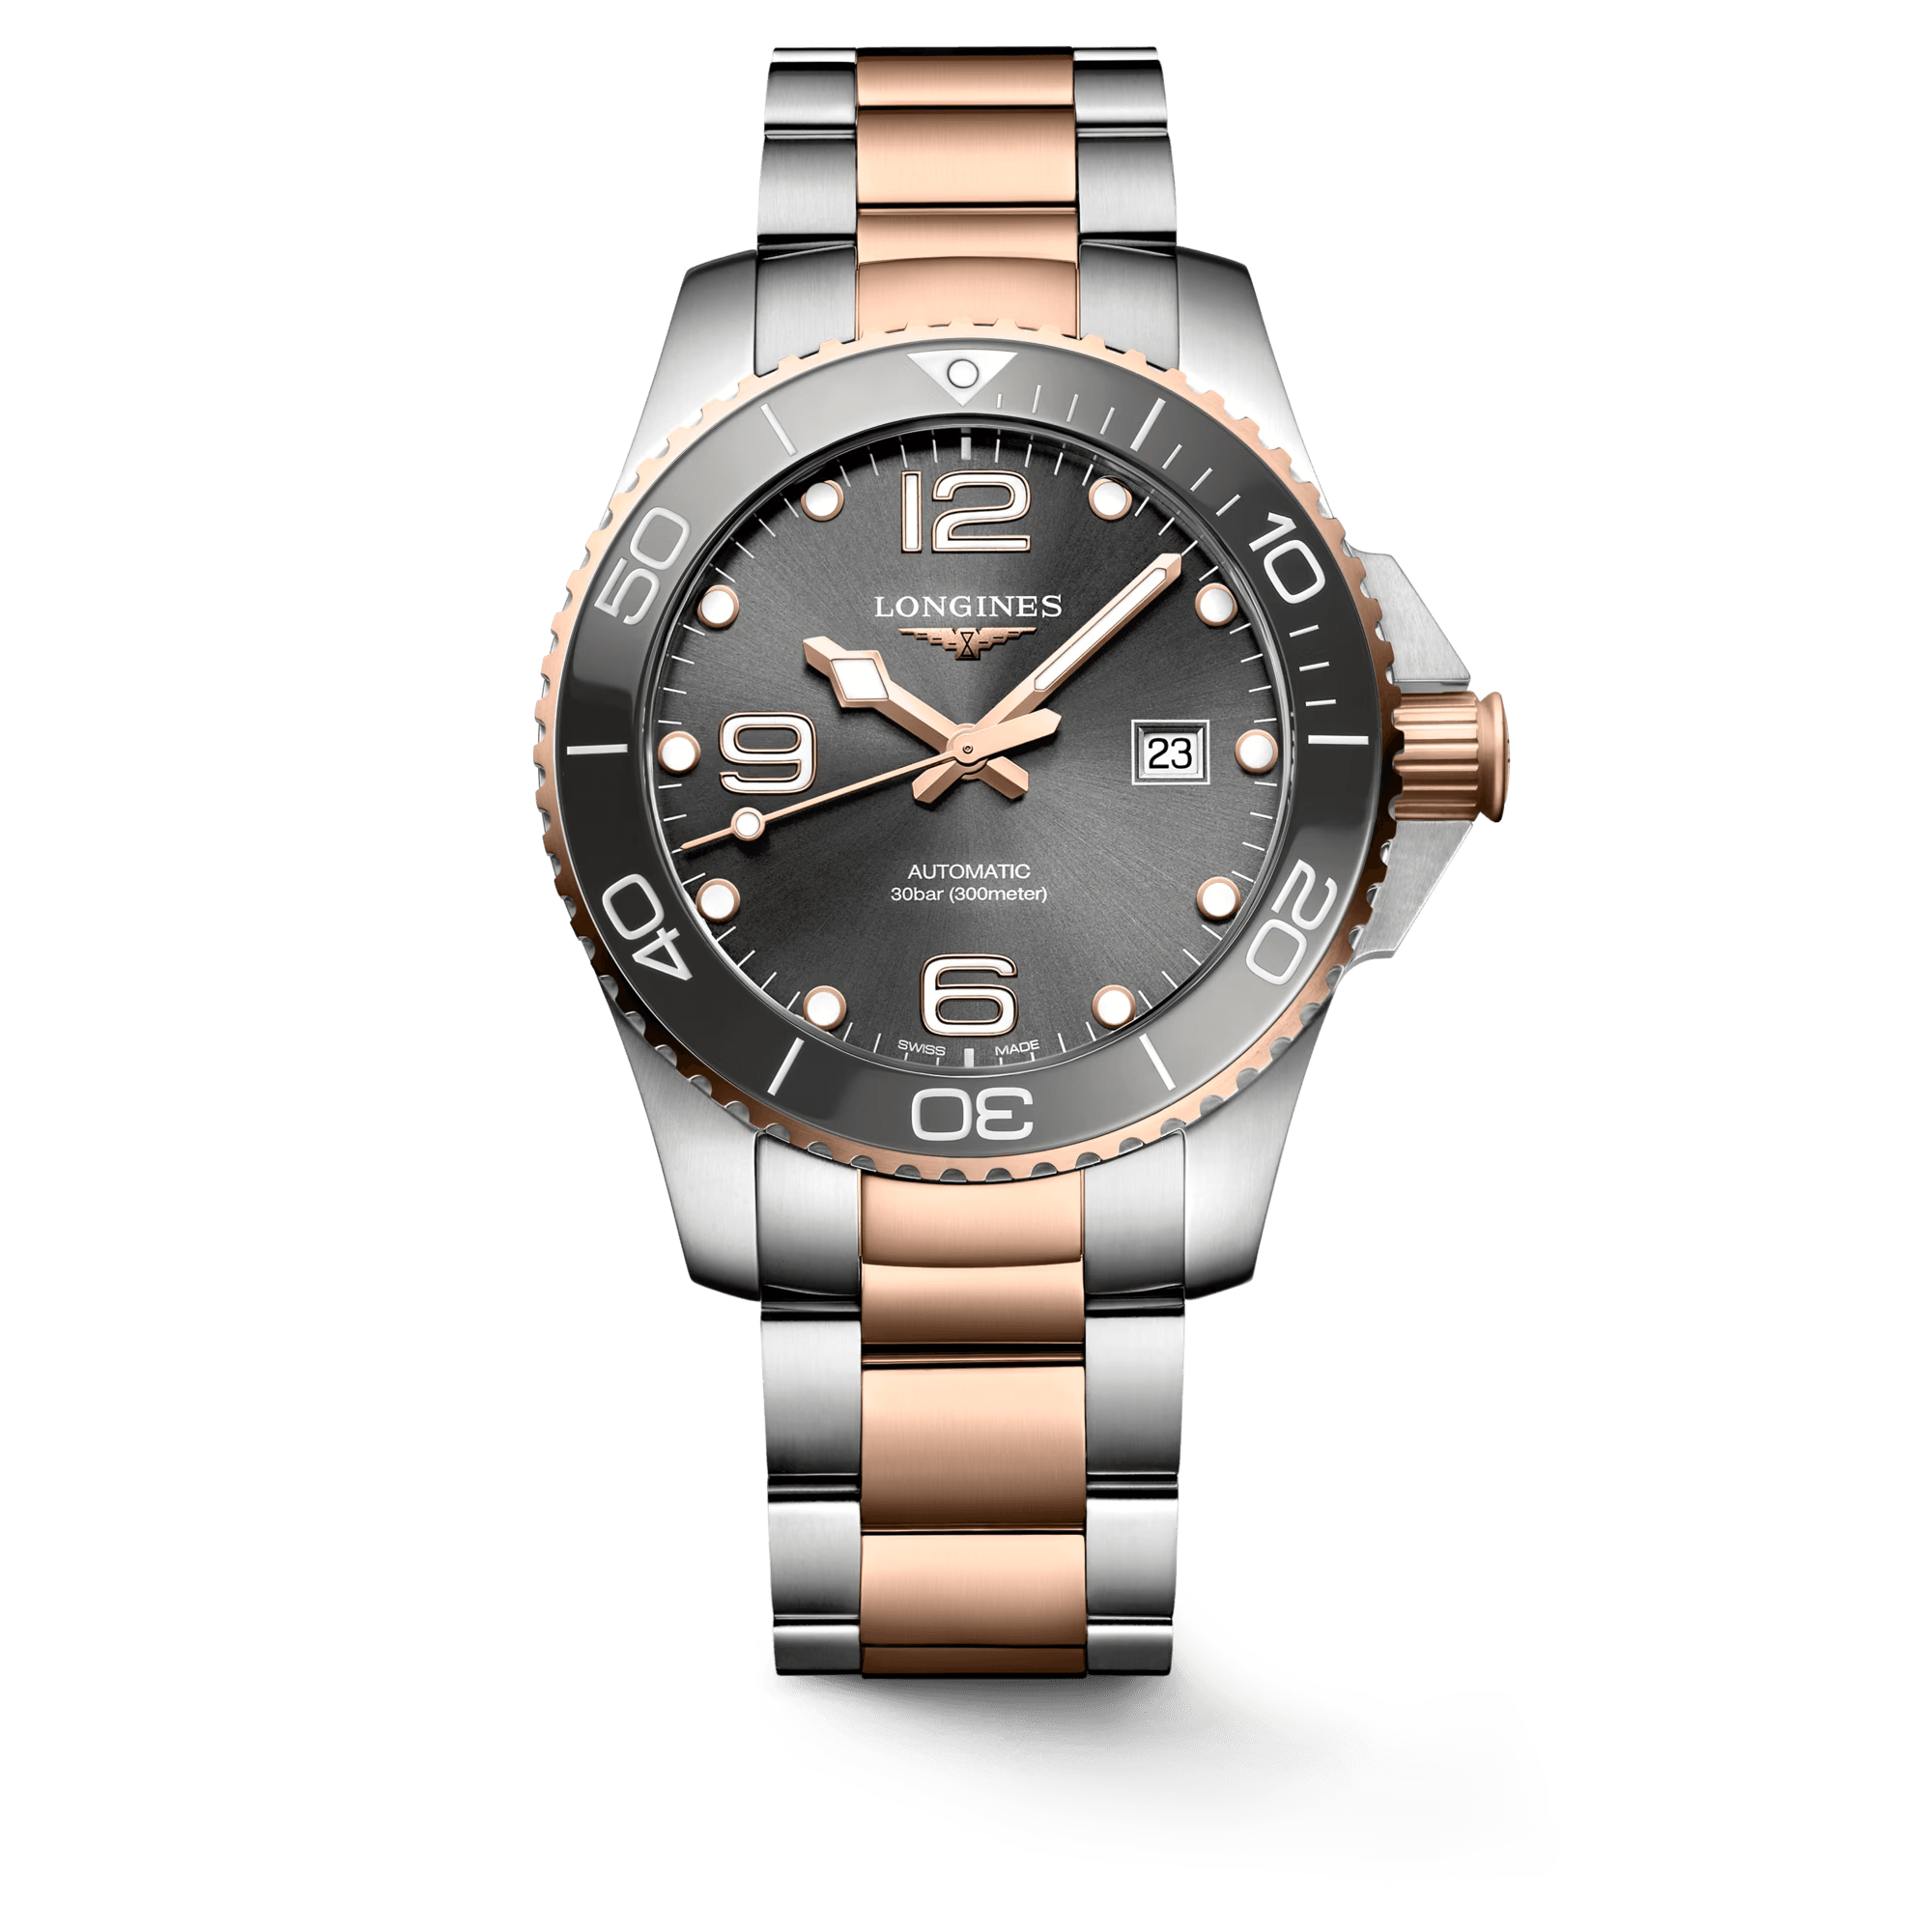 Longines Hydroconquest Automatic Men's Watch L37823787